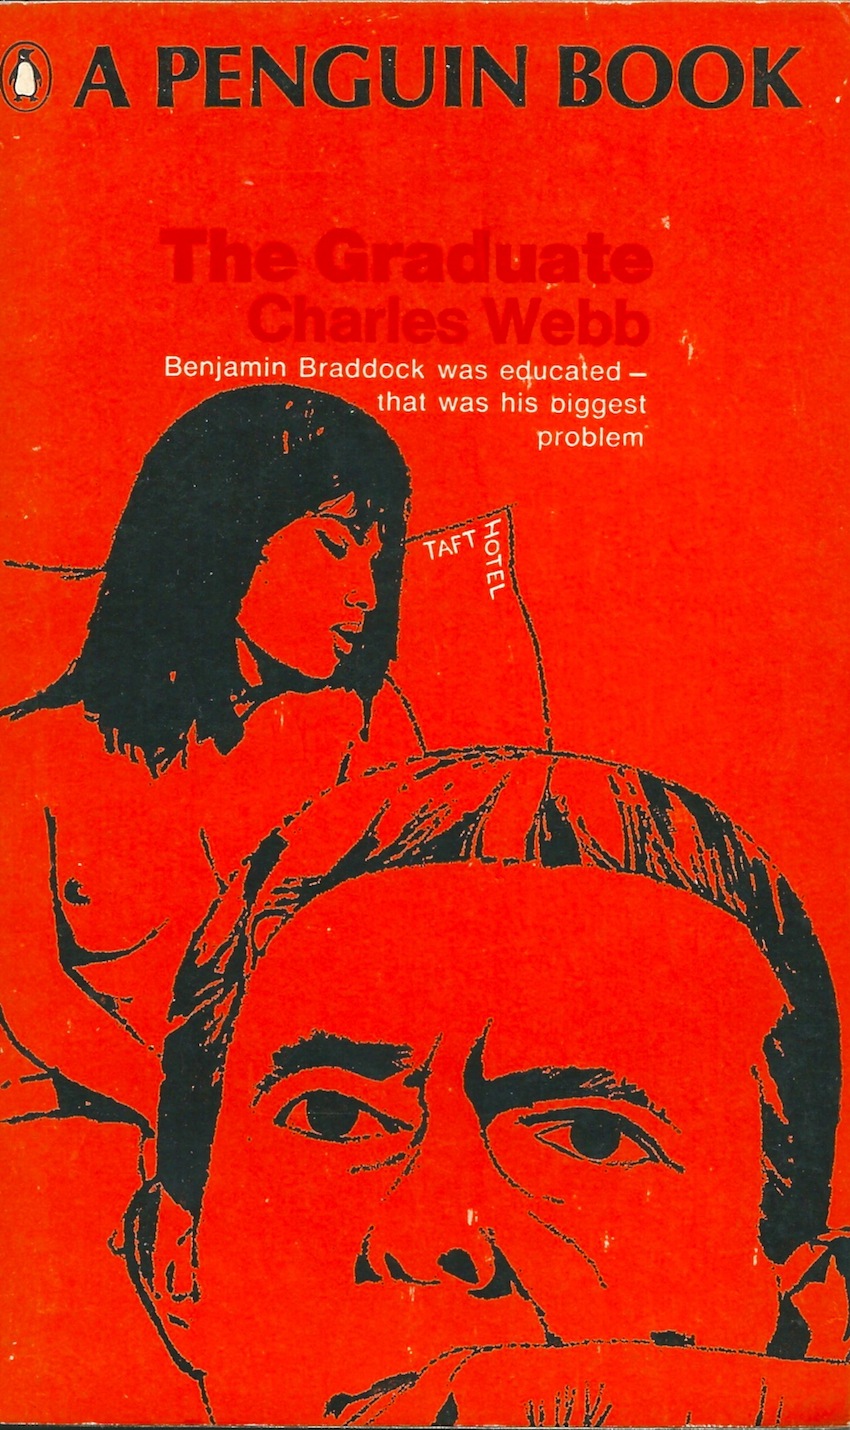 The Graduate, 1967 Penguin edition